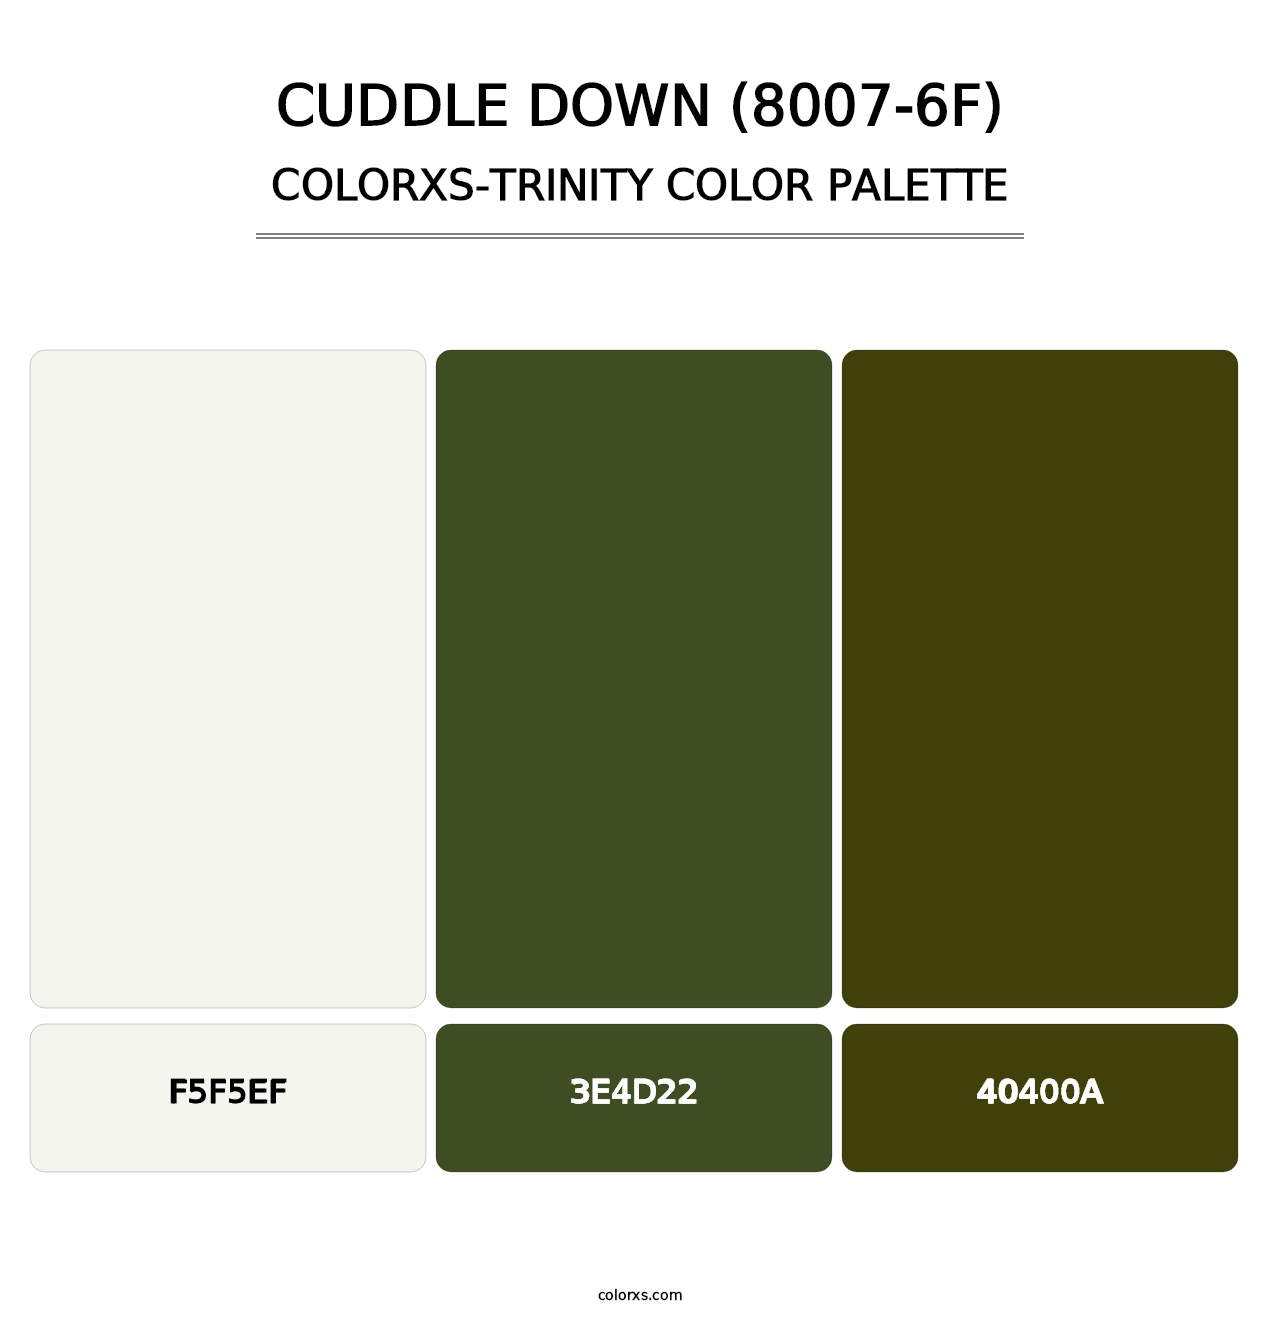 Cuddle Down (8007-6F) - Colorxs Trinity Palette